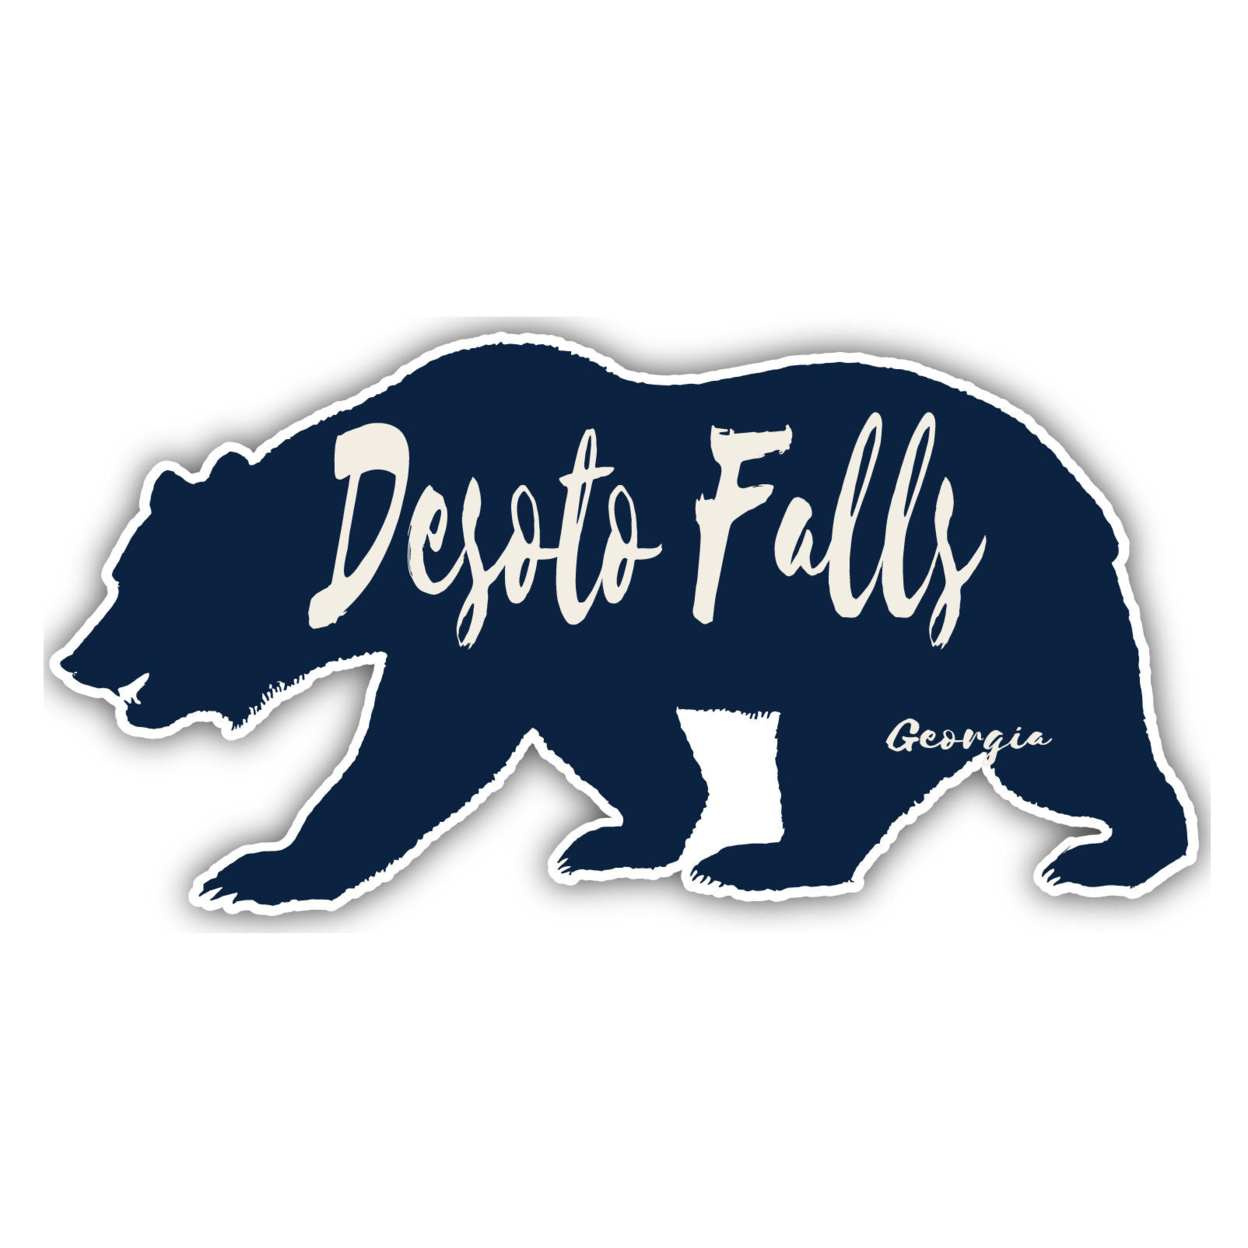 DeSoto Falls Georgia Souvenir Decorative Stickers (Choose Theme And Size) - Single Unit, 2-Inch, Bear